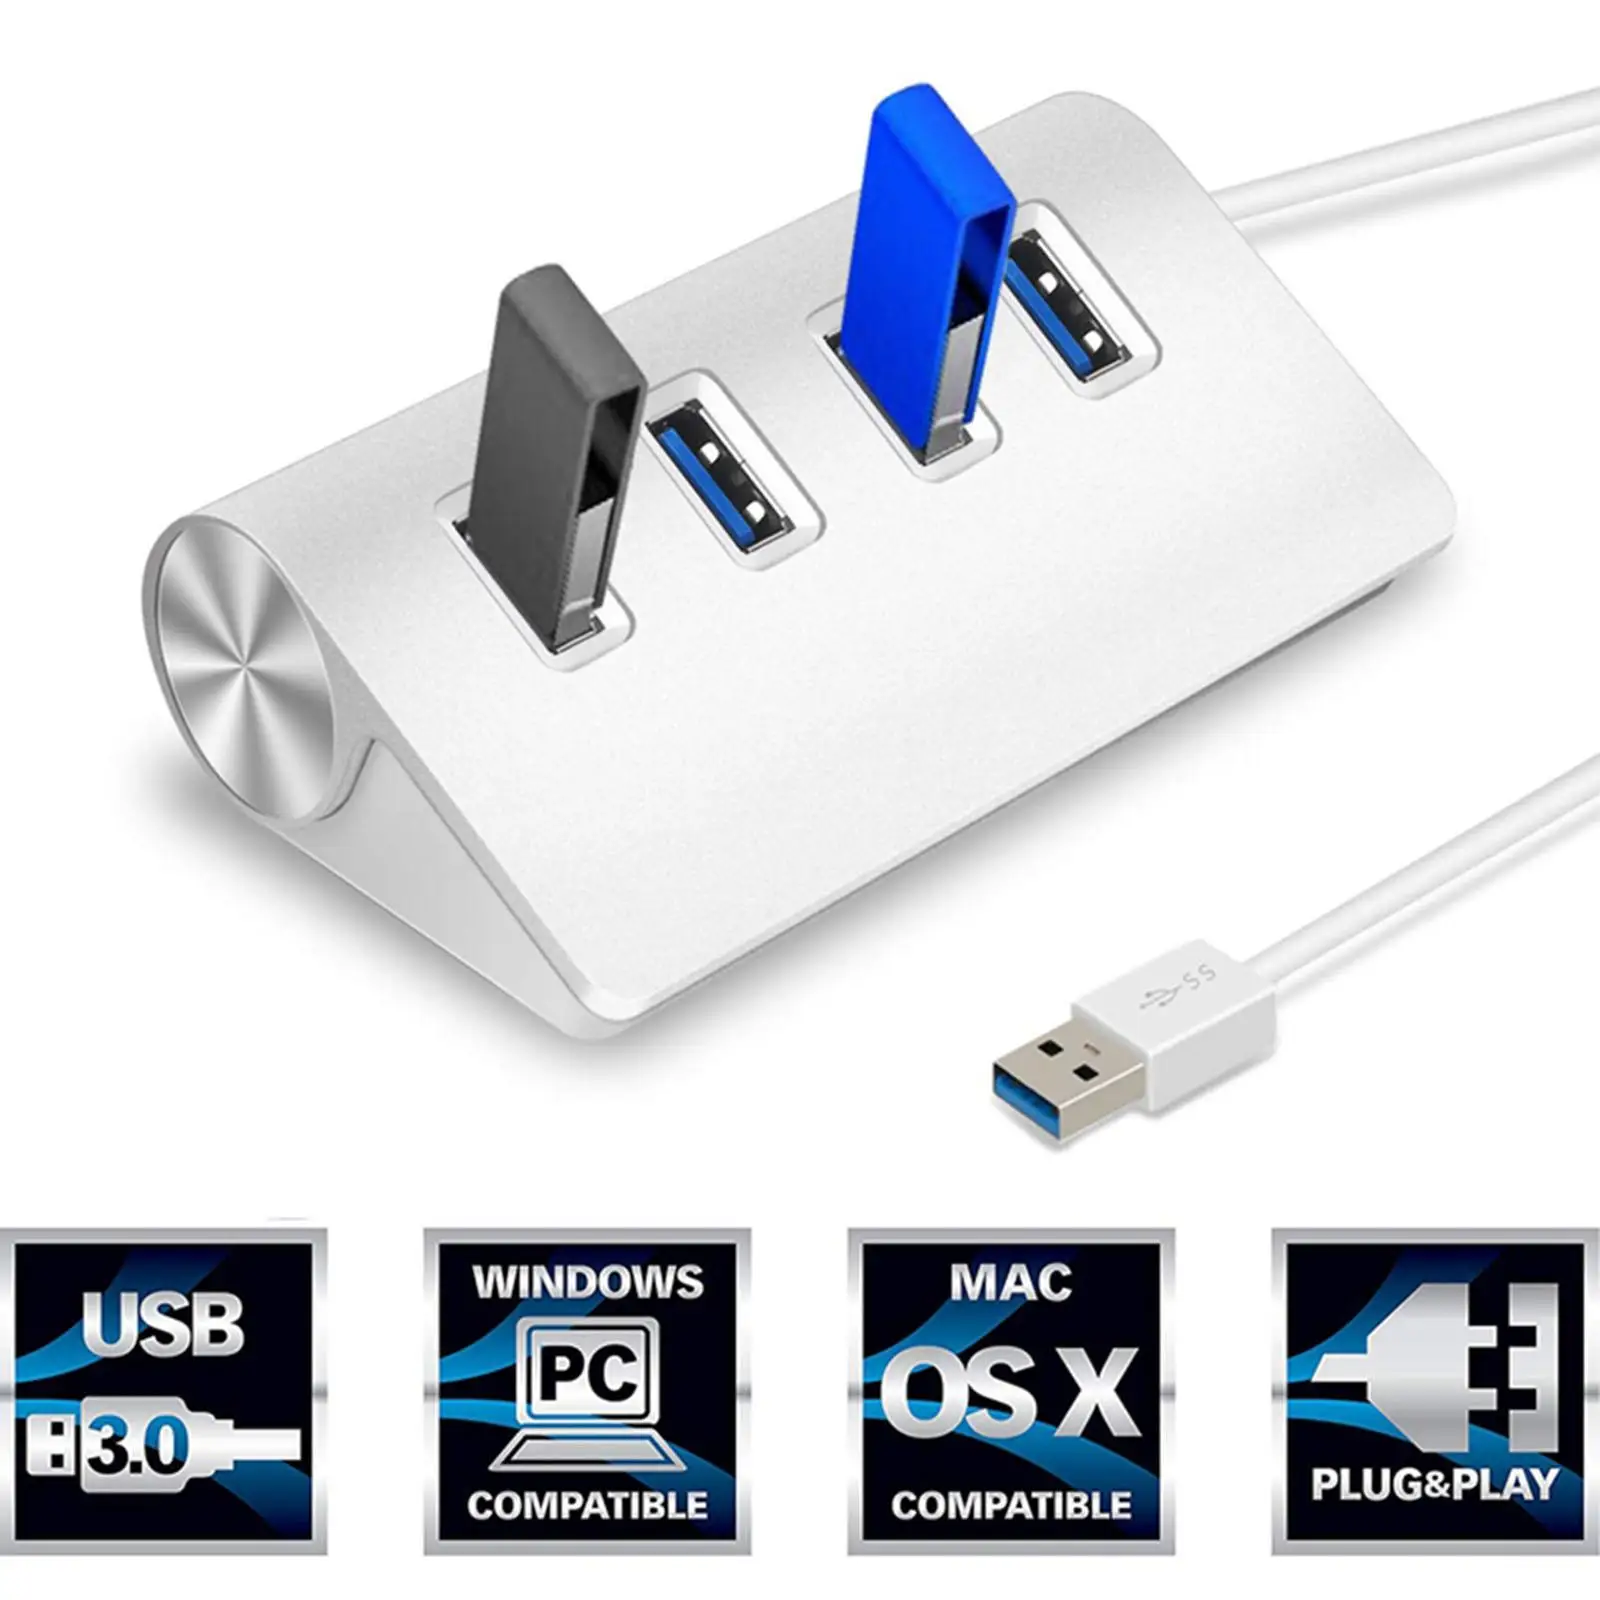 Portable USB 3.0 Hub 4 Port 5Gbps Speed USB Extender for Mobile Keyboard Headset PC